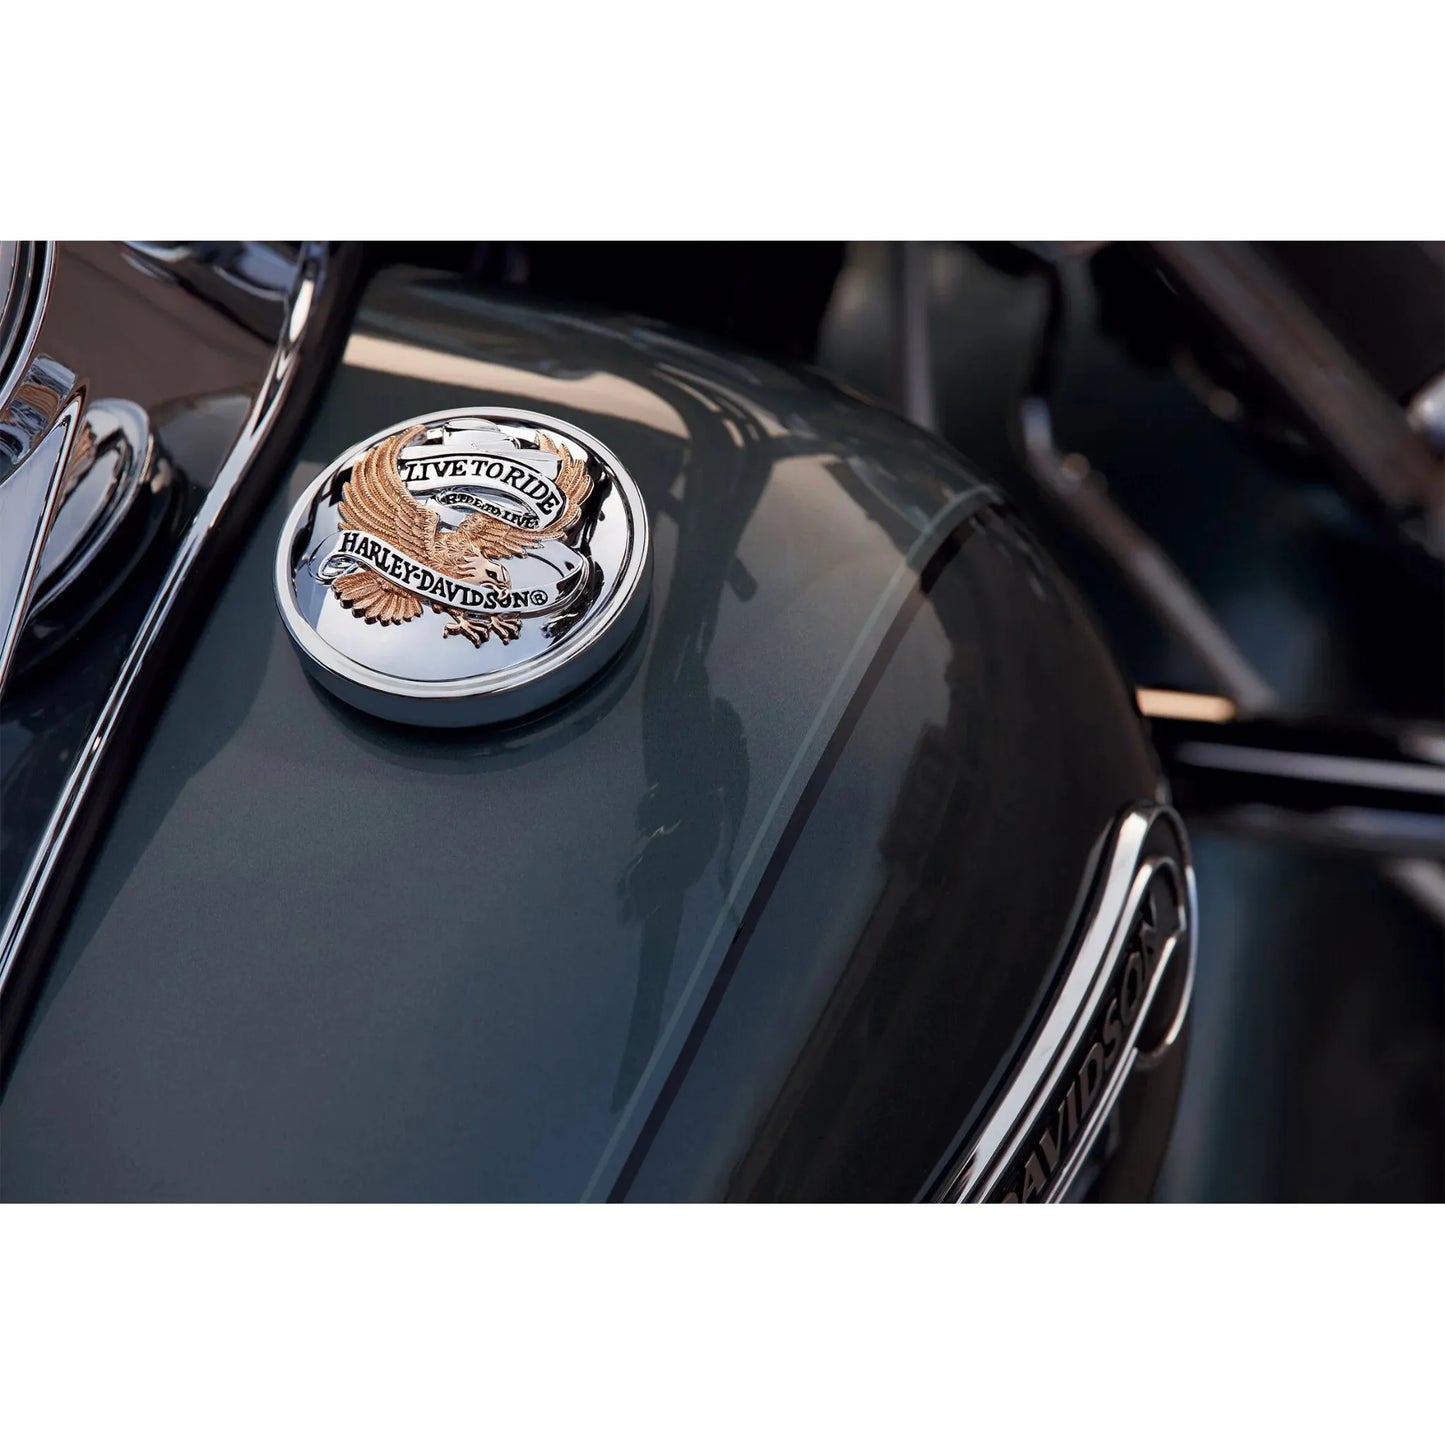 Harley-Davidson® Live To Ride Fuel Cap Medallion